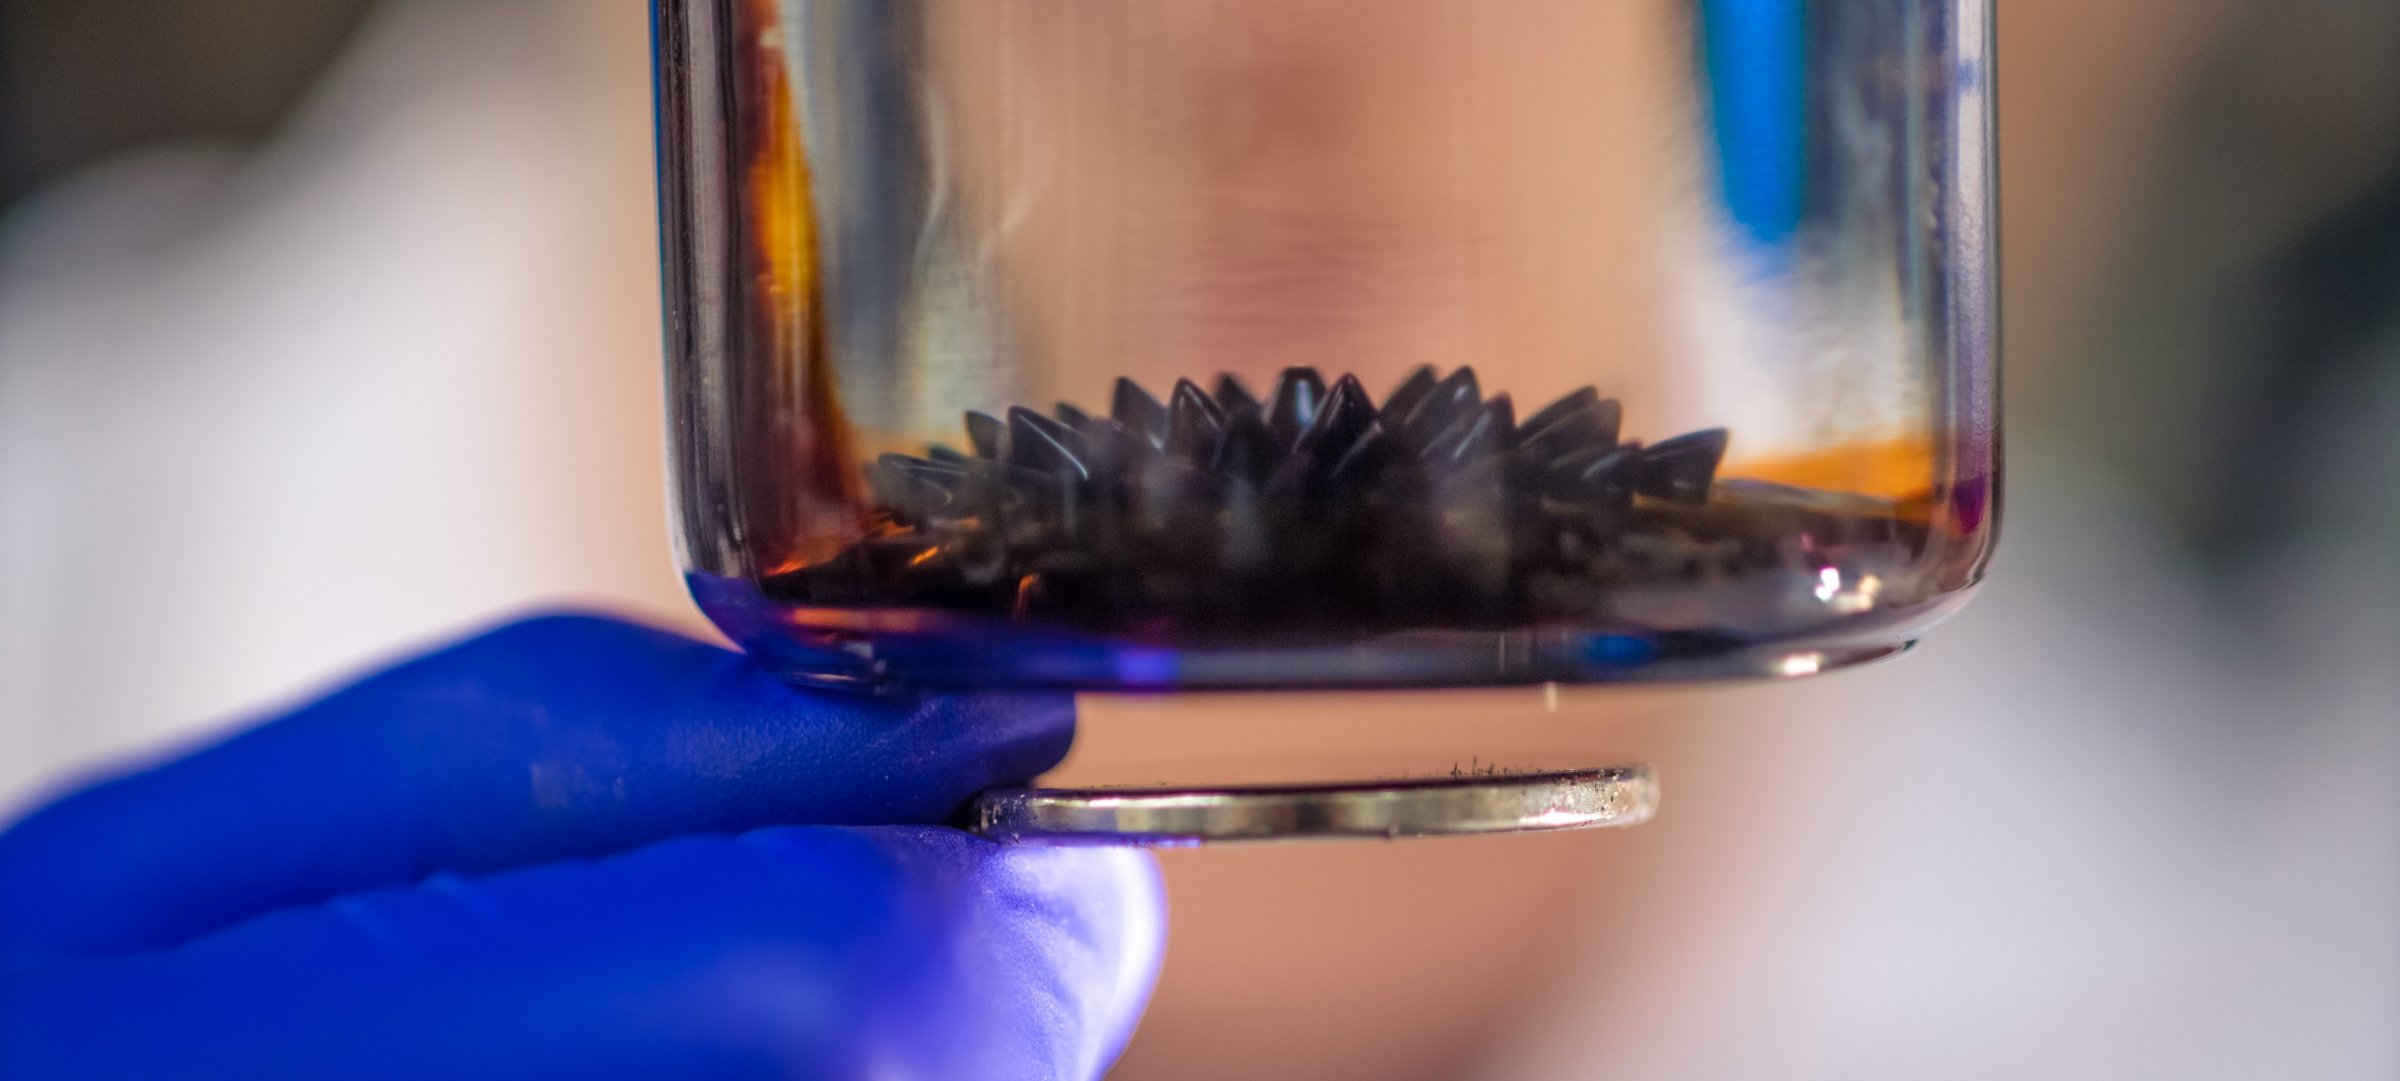 Ferrofluid research for satellites